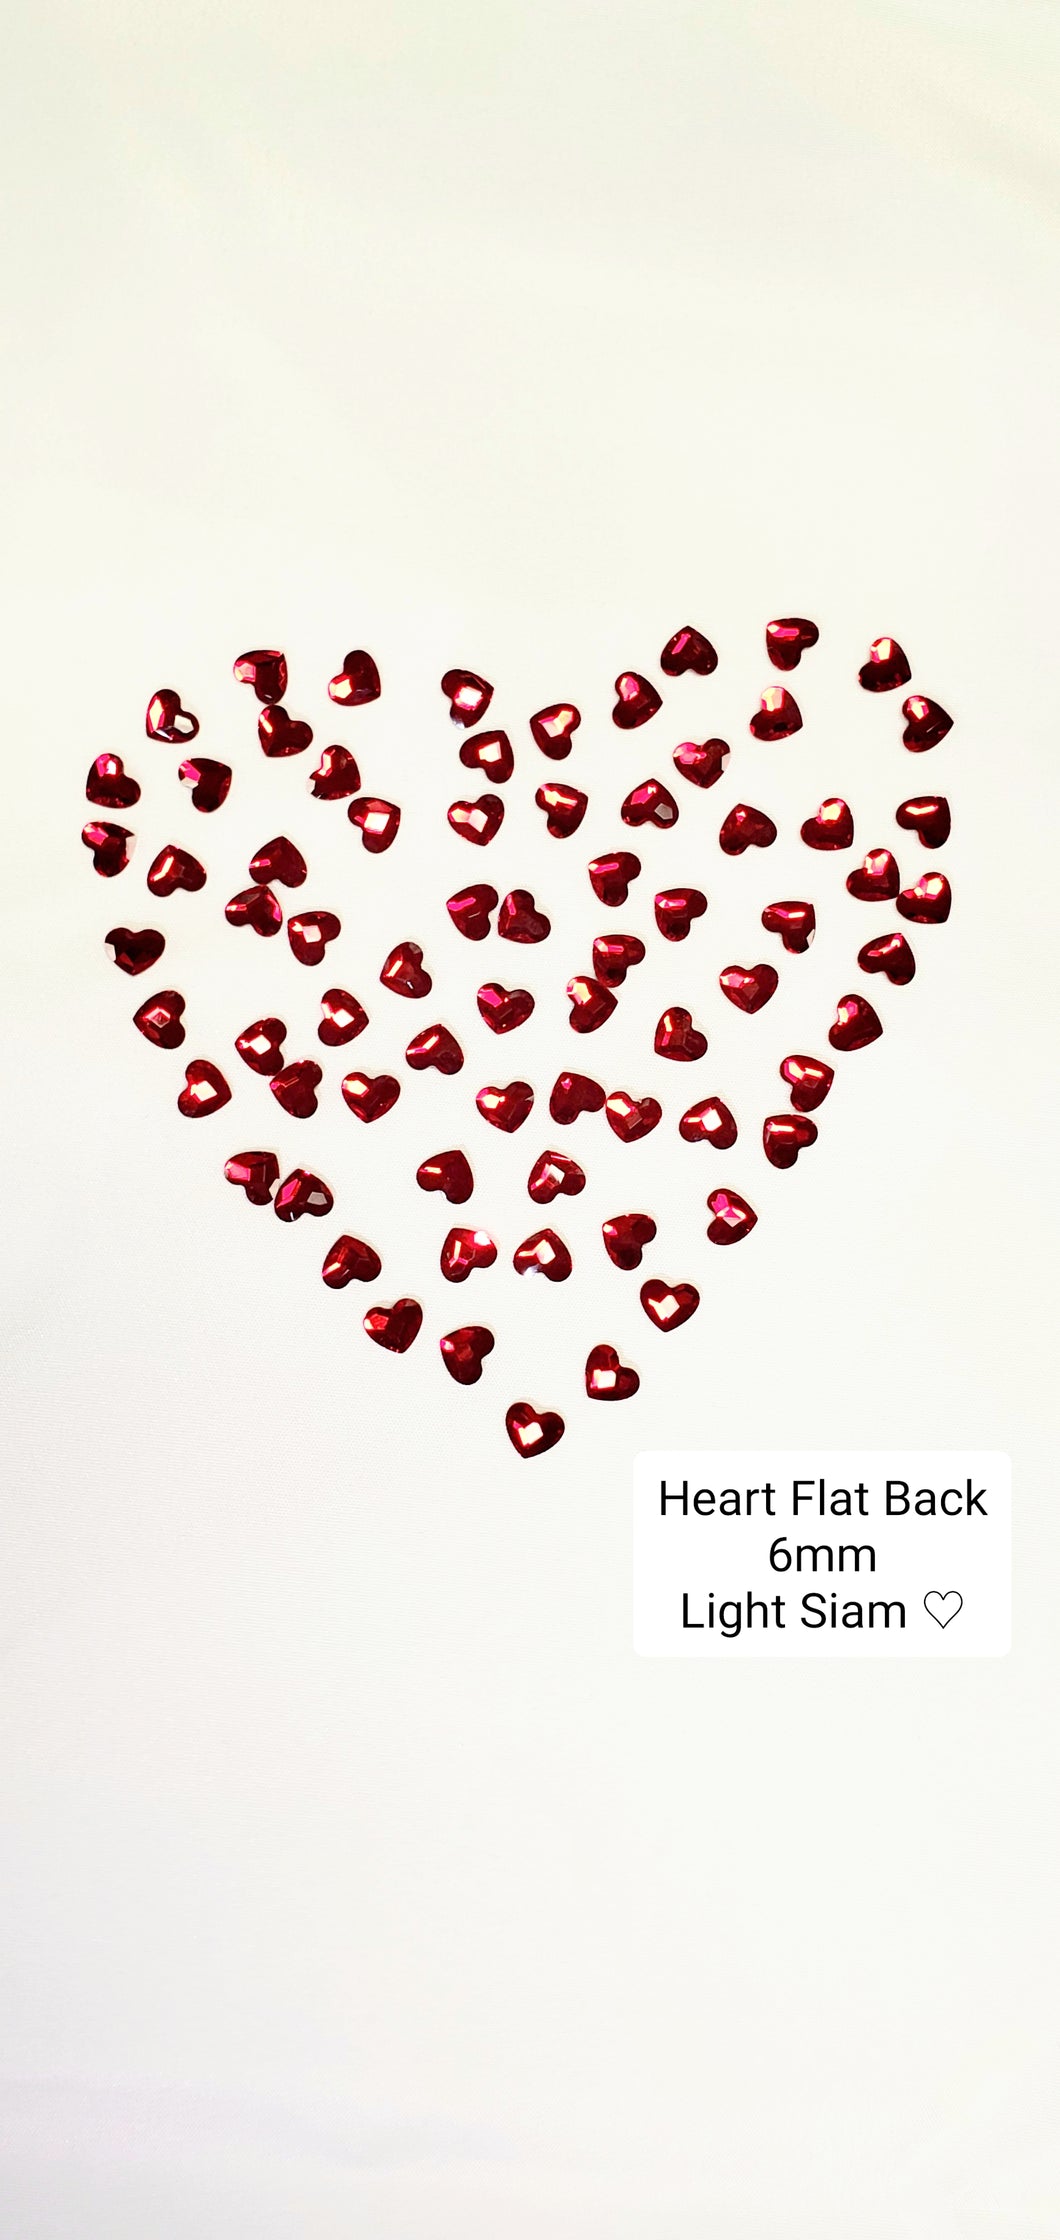 Swarovski Light Siam Heart Flat Back Crystal